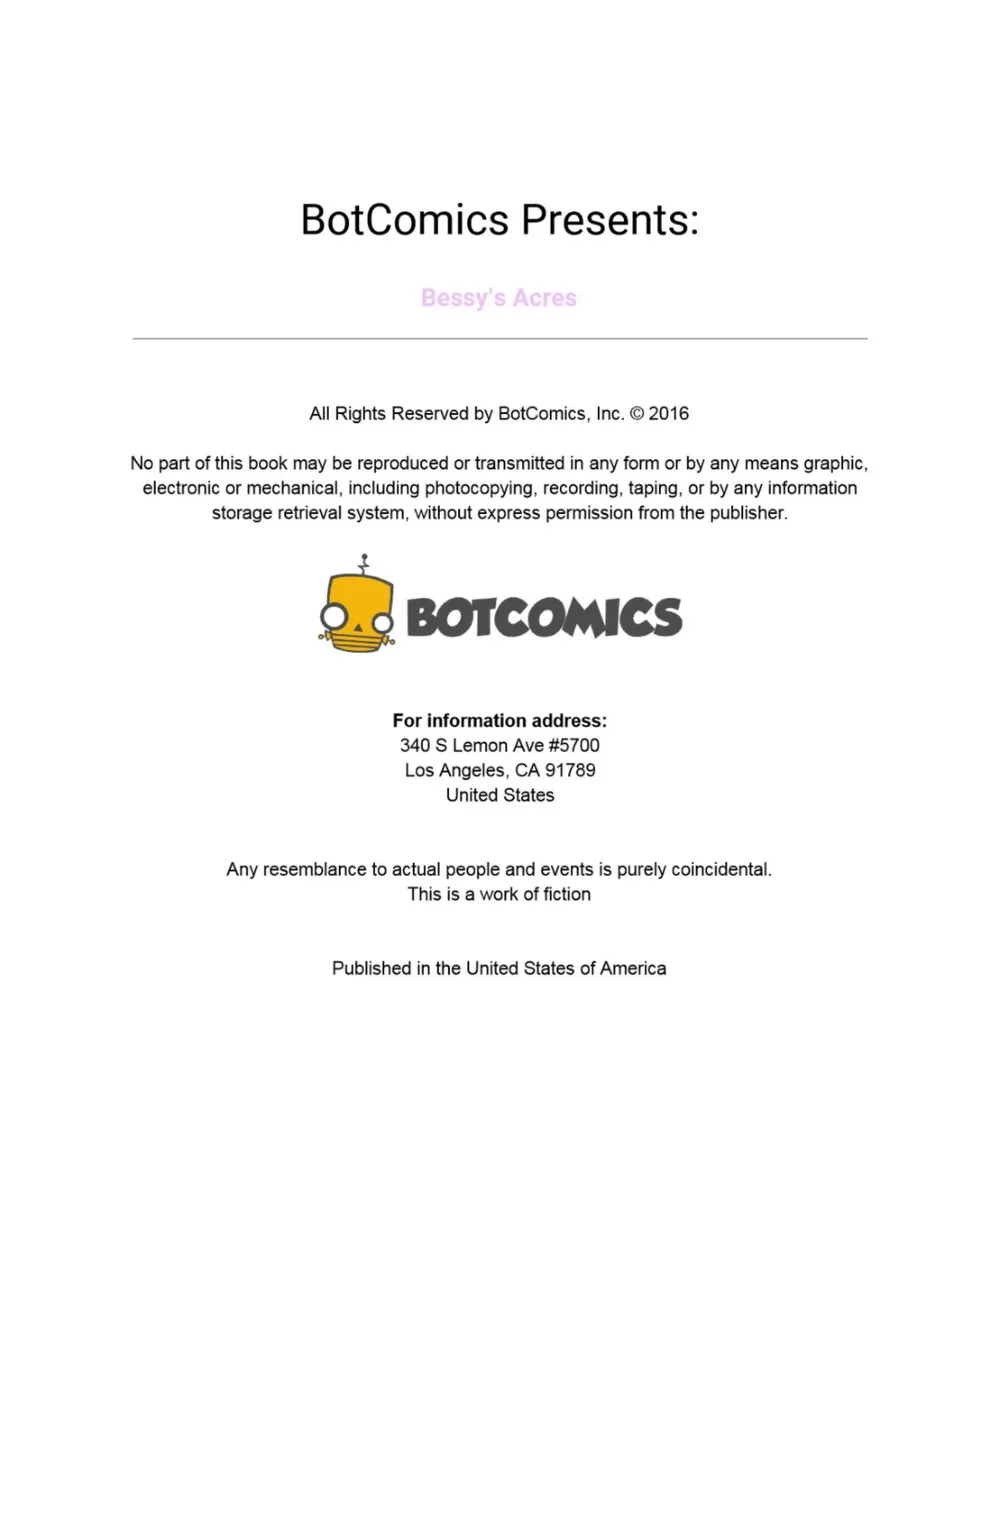 Bessy’s Acres Issue 4- Botcomics - Page 2